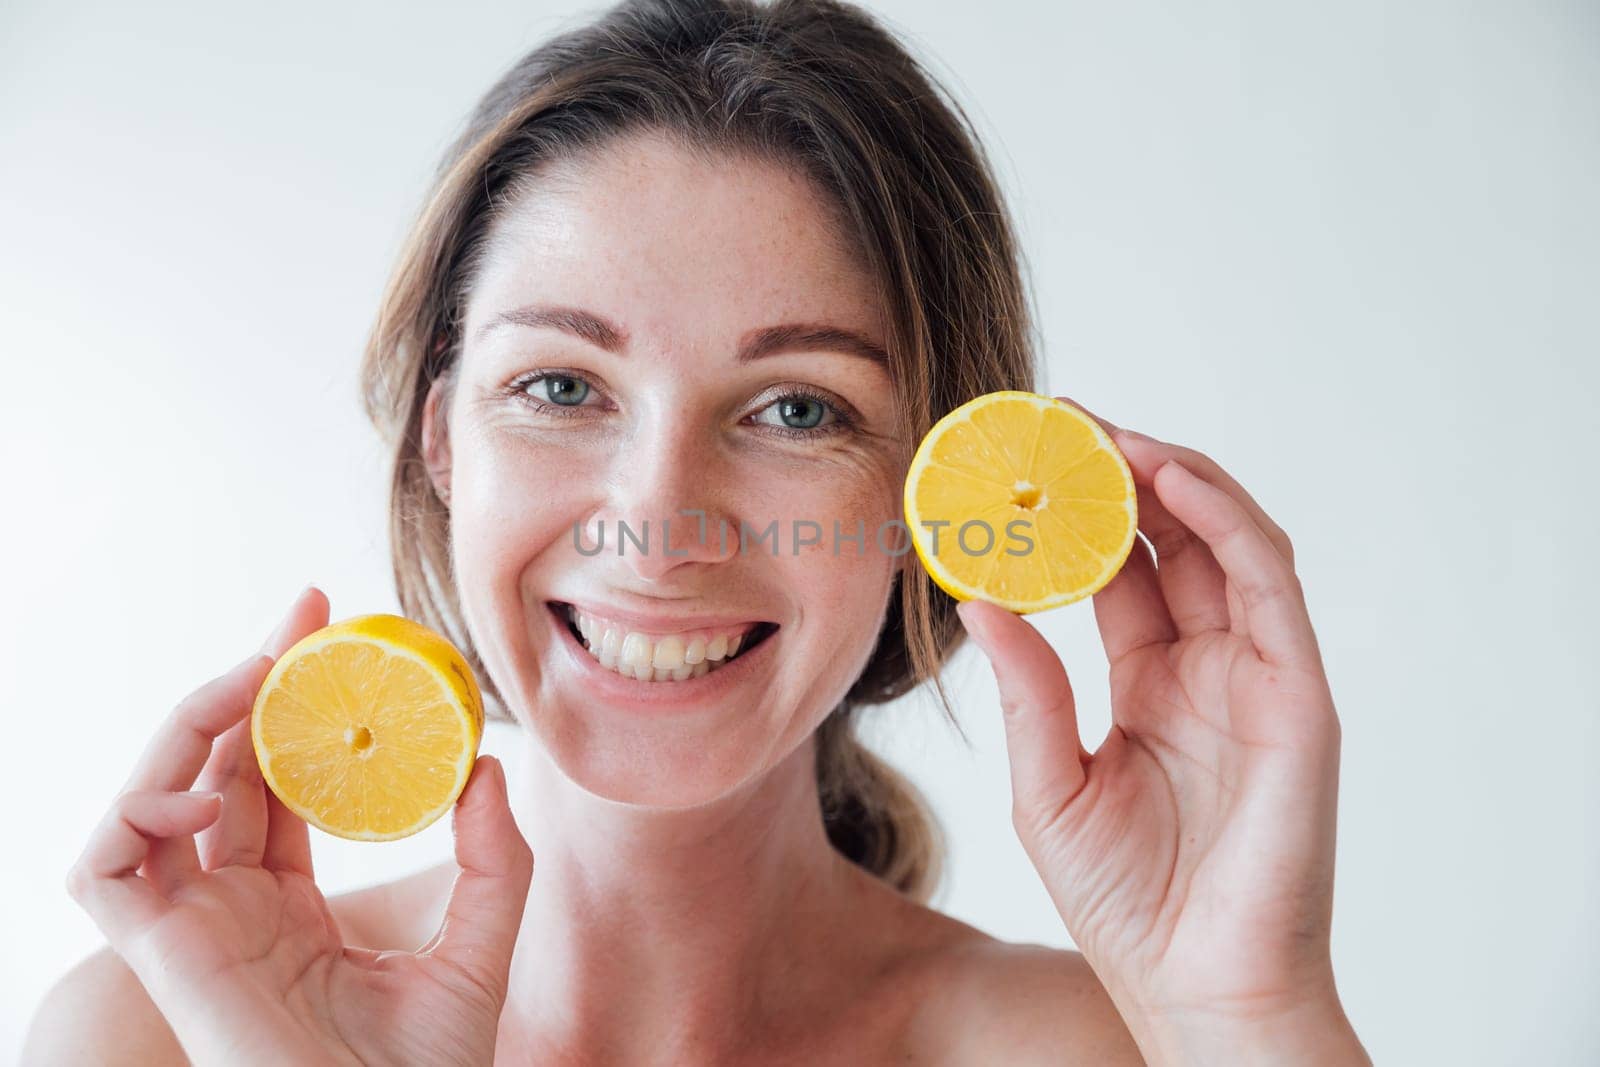 Beautiful woman holding yellow lemons and smiling by Simakov